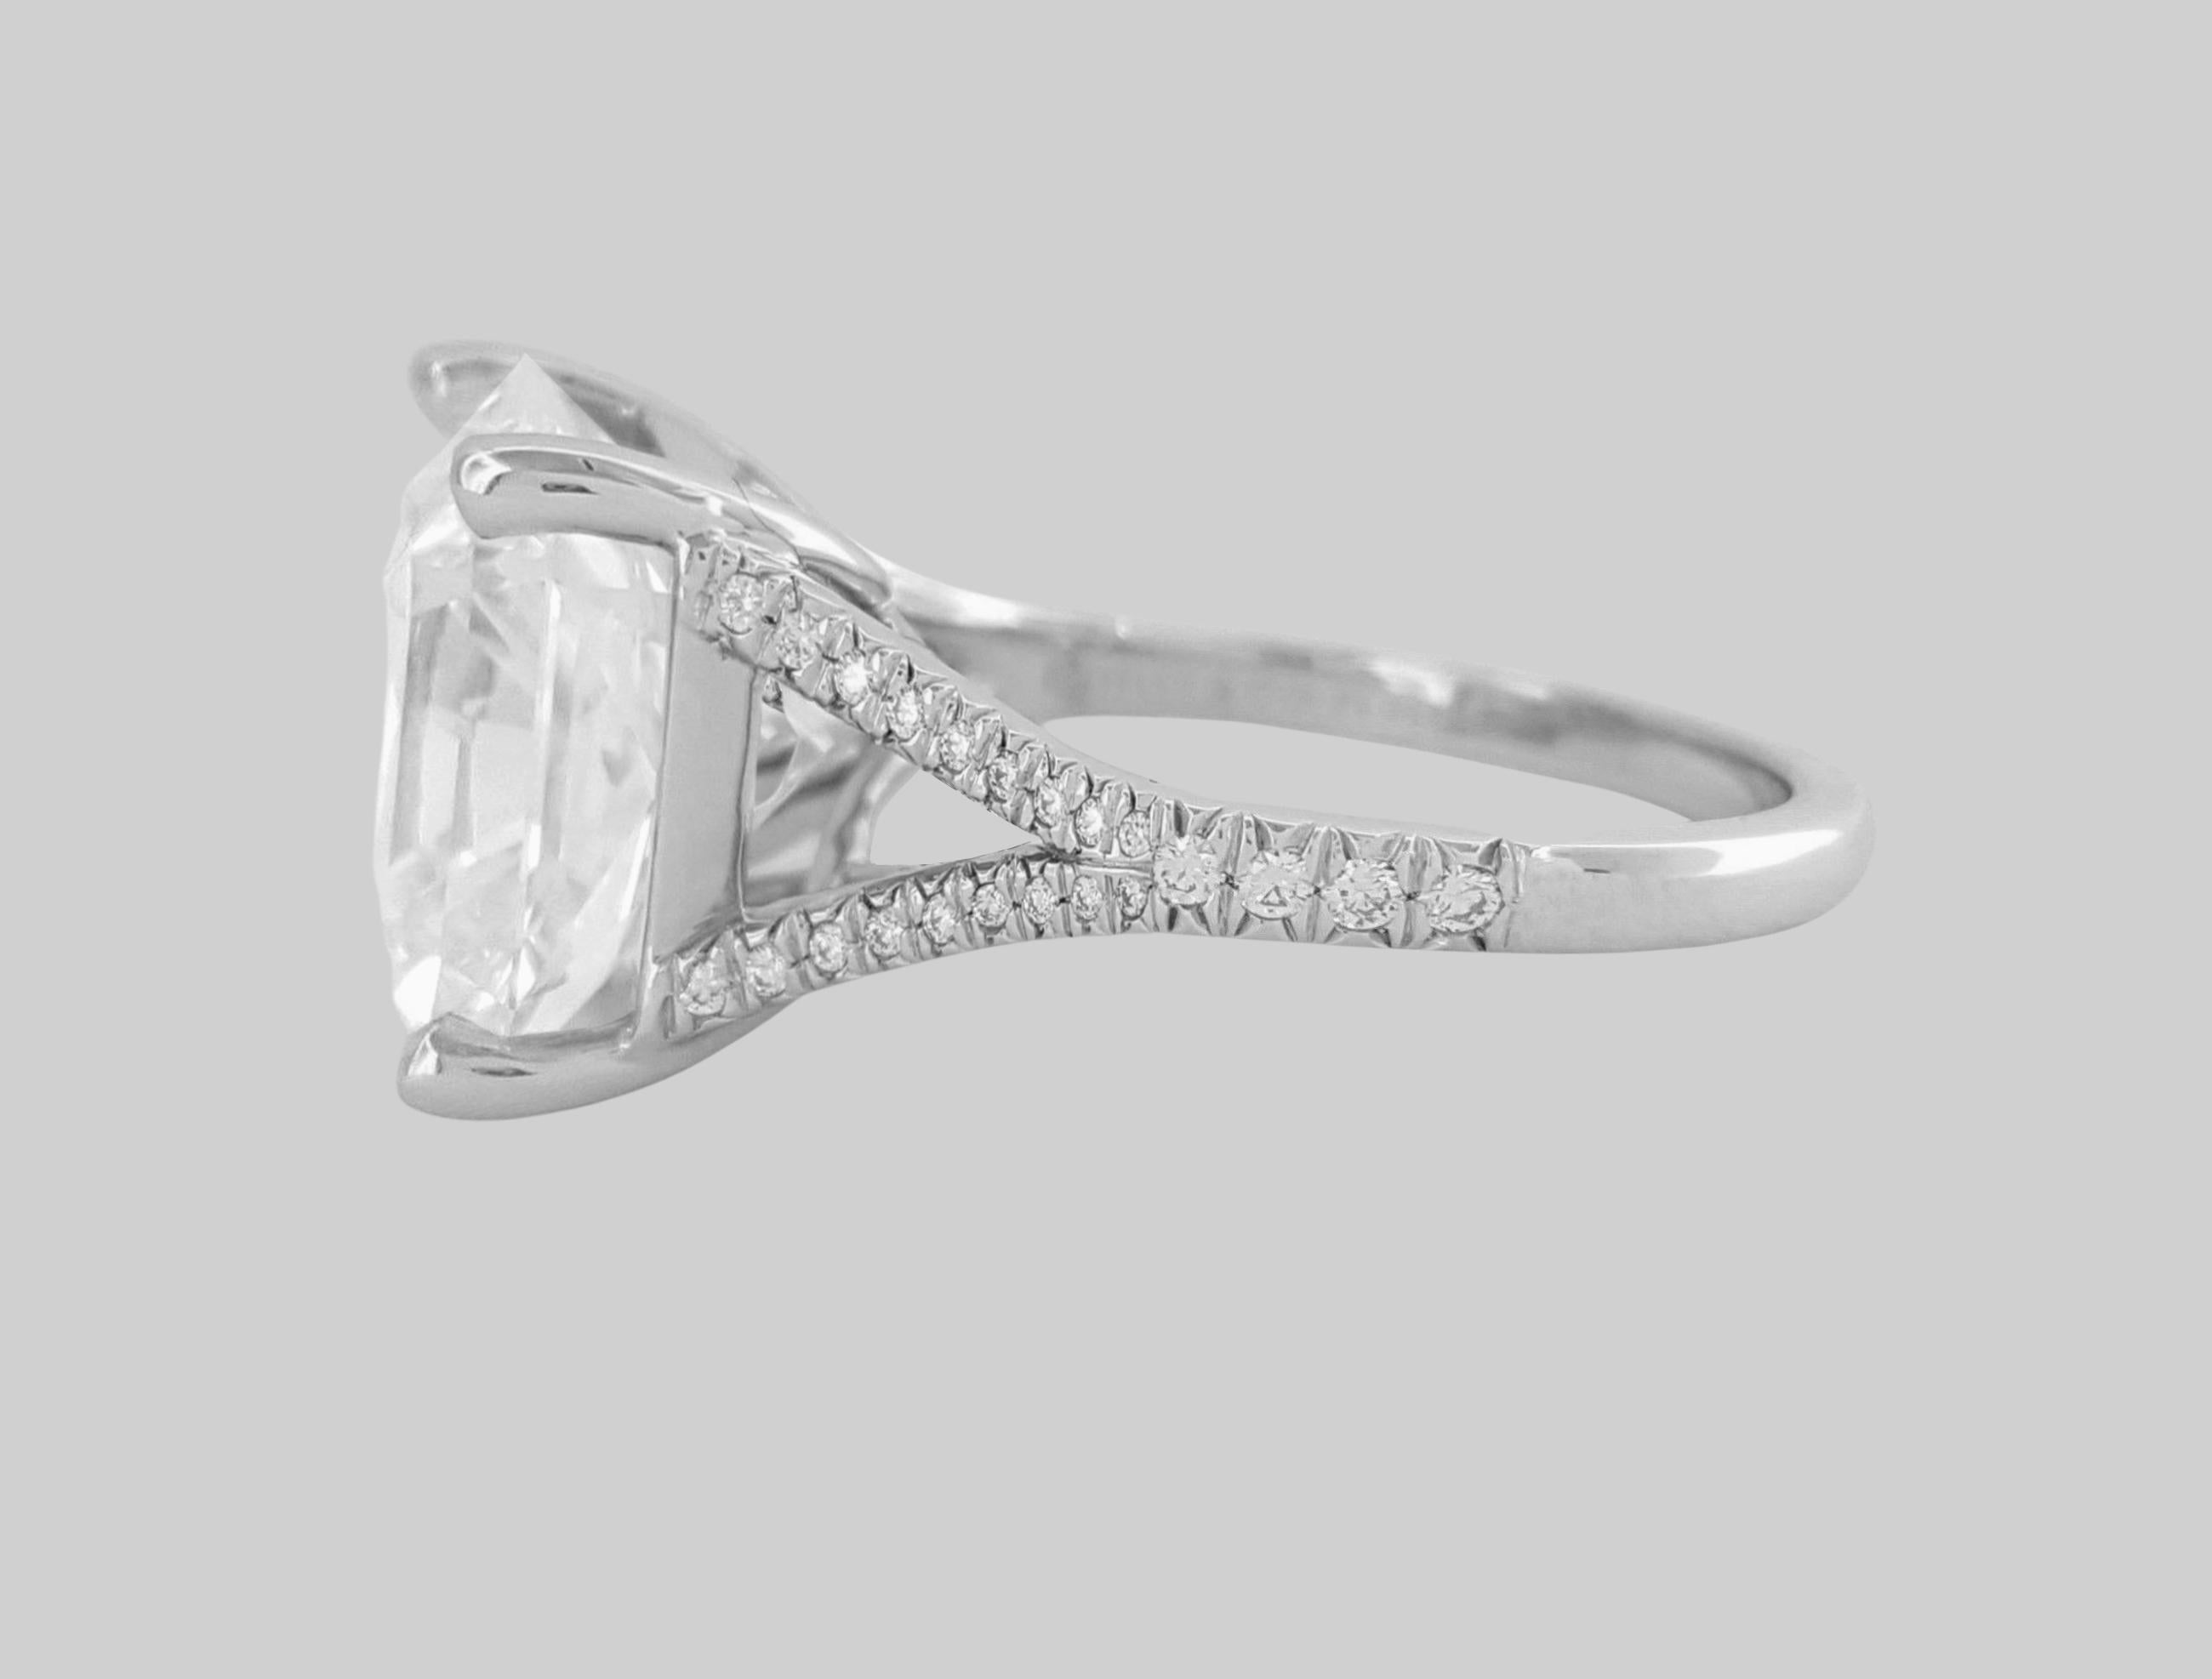 lucida diamond ring from tiffany's